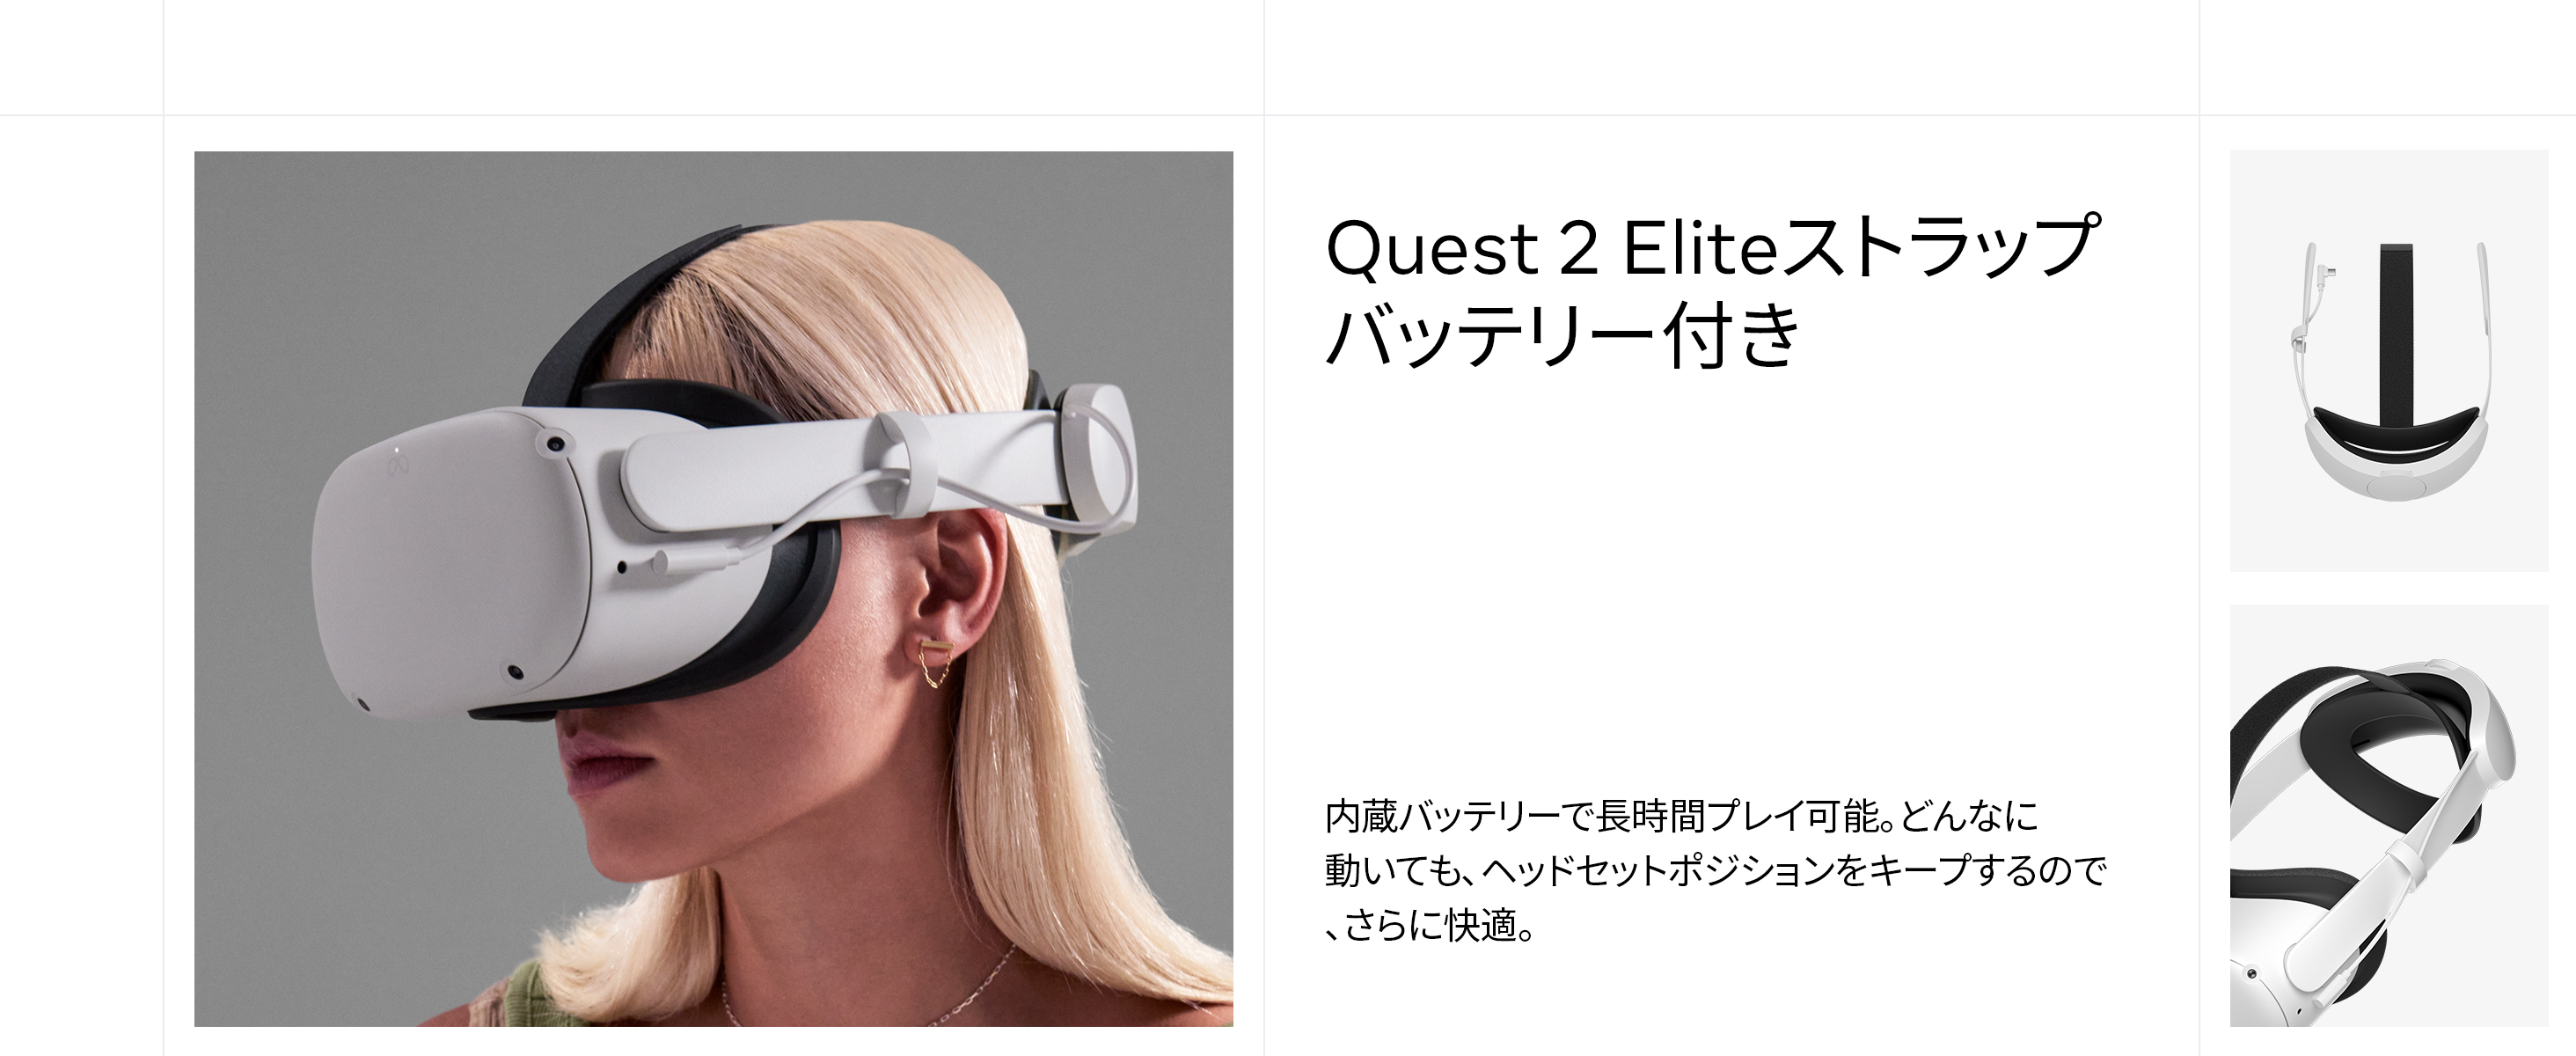 Meta Quest2 Eliteストラップバッテリー付き 快適なフィット感で長時間プレイ可能。